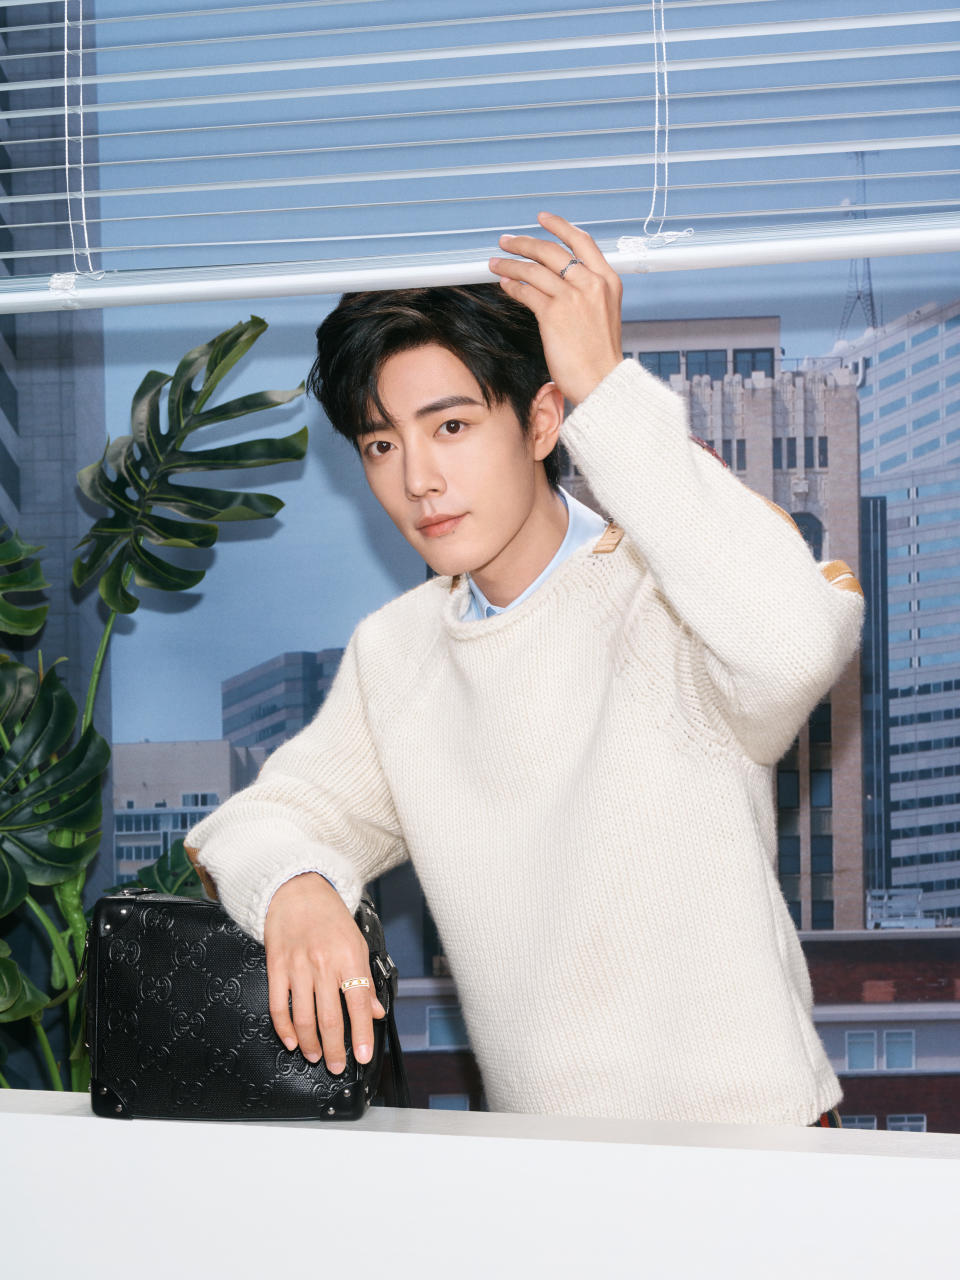 Xiao Zhan is Gucci’s latest brand ambassador.